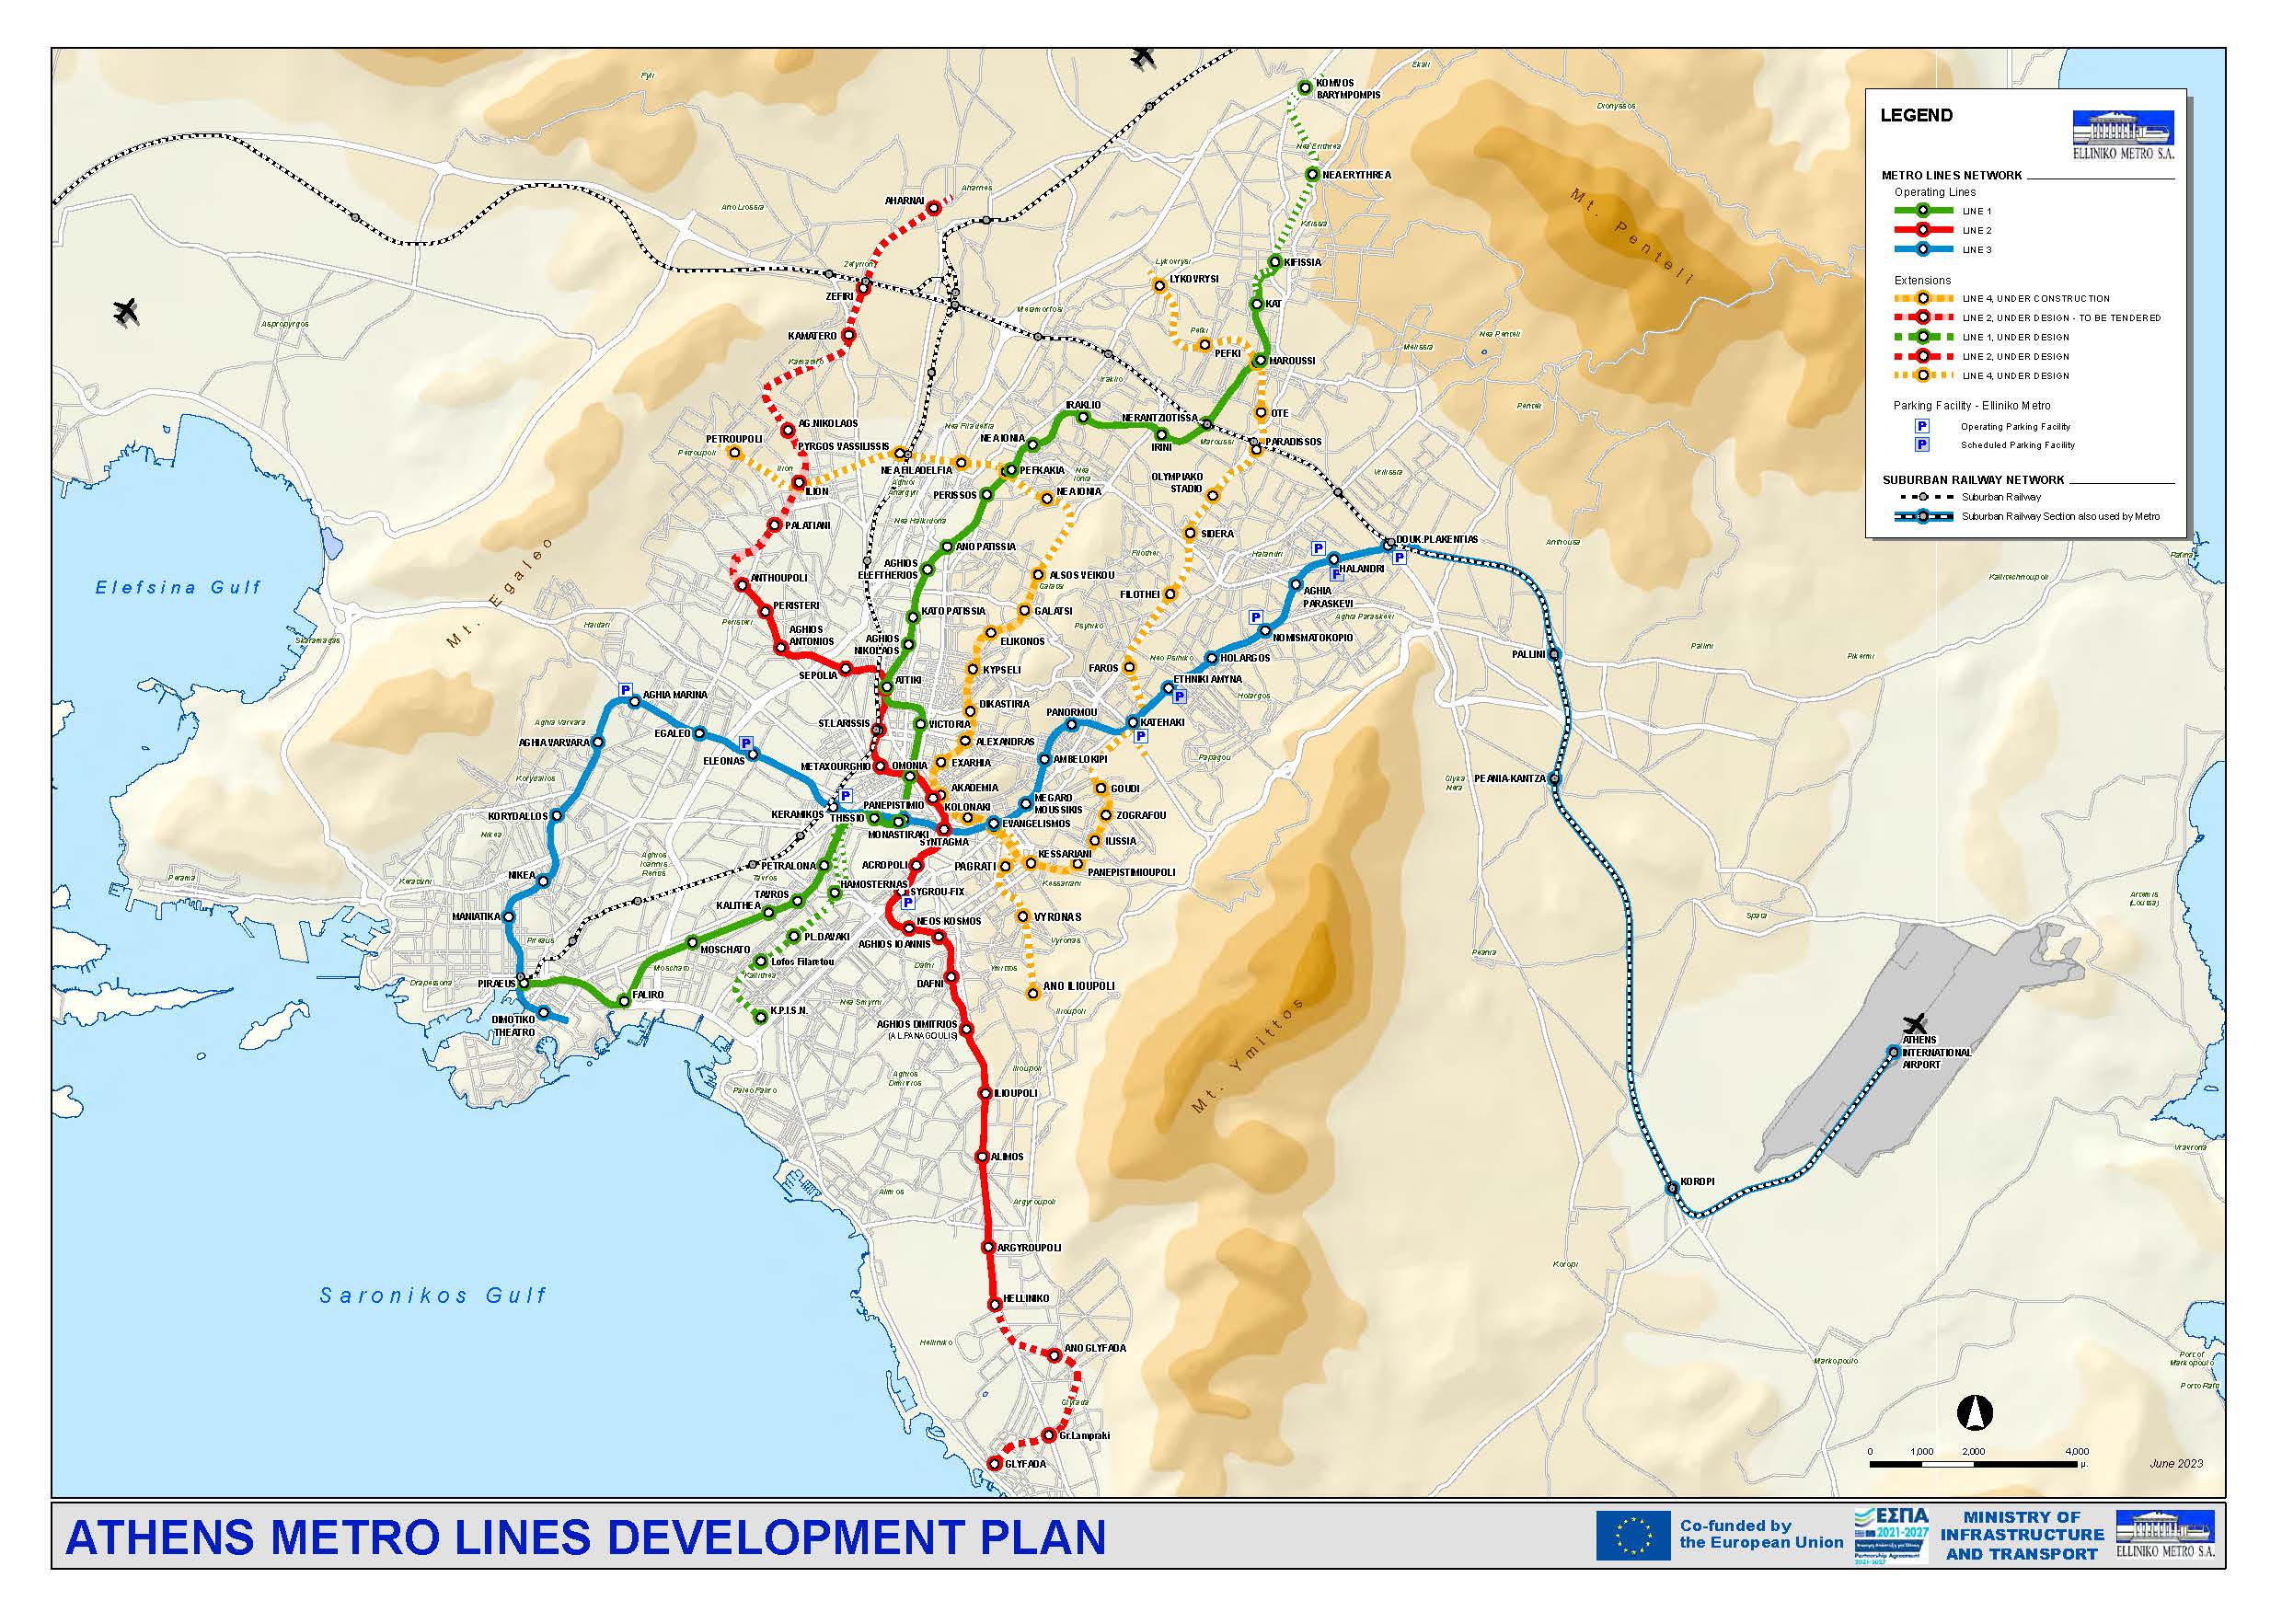 Athens Metro lines development plan